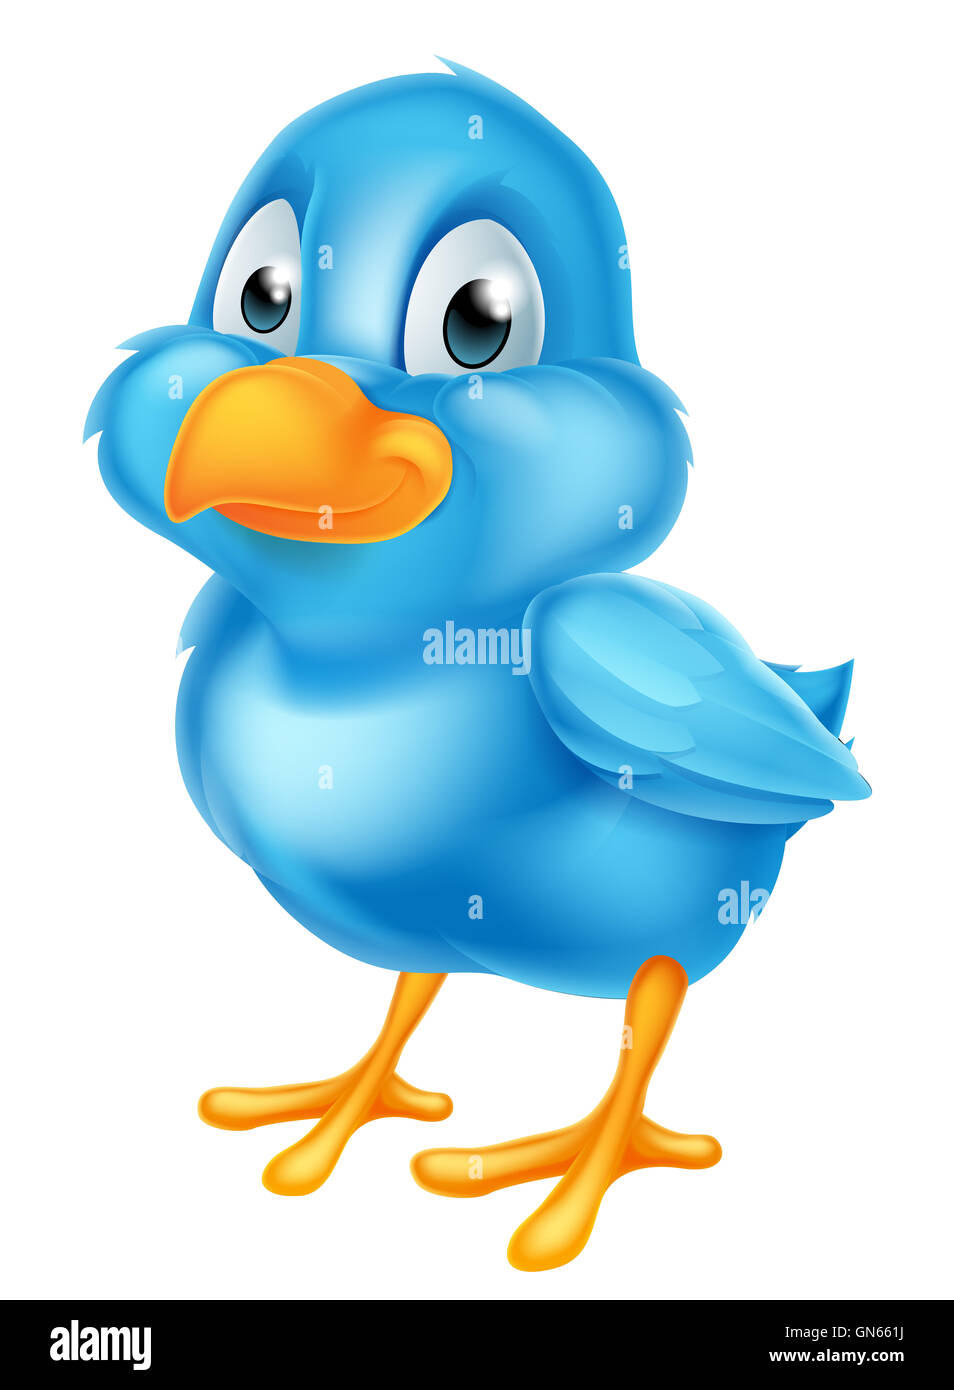 An illustration of a cute cartoon blue bird character Stock Photo